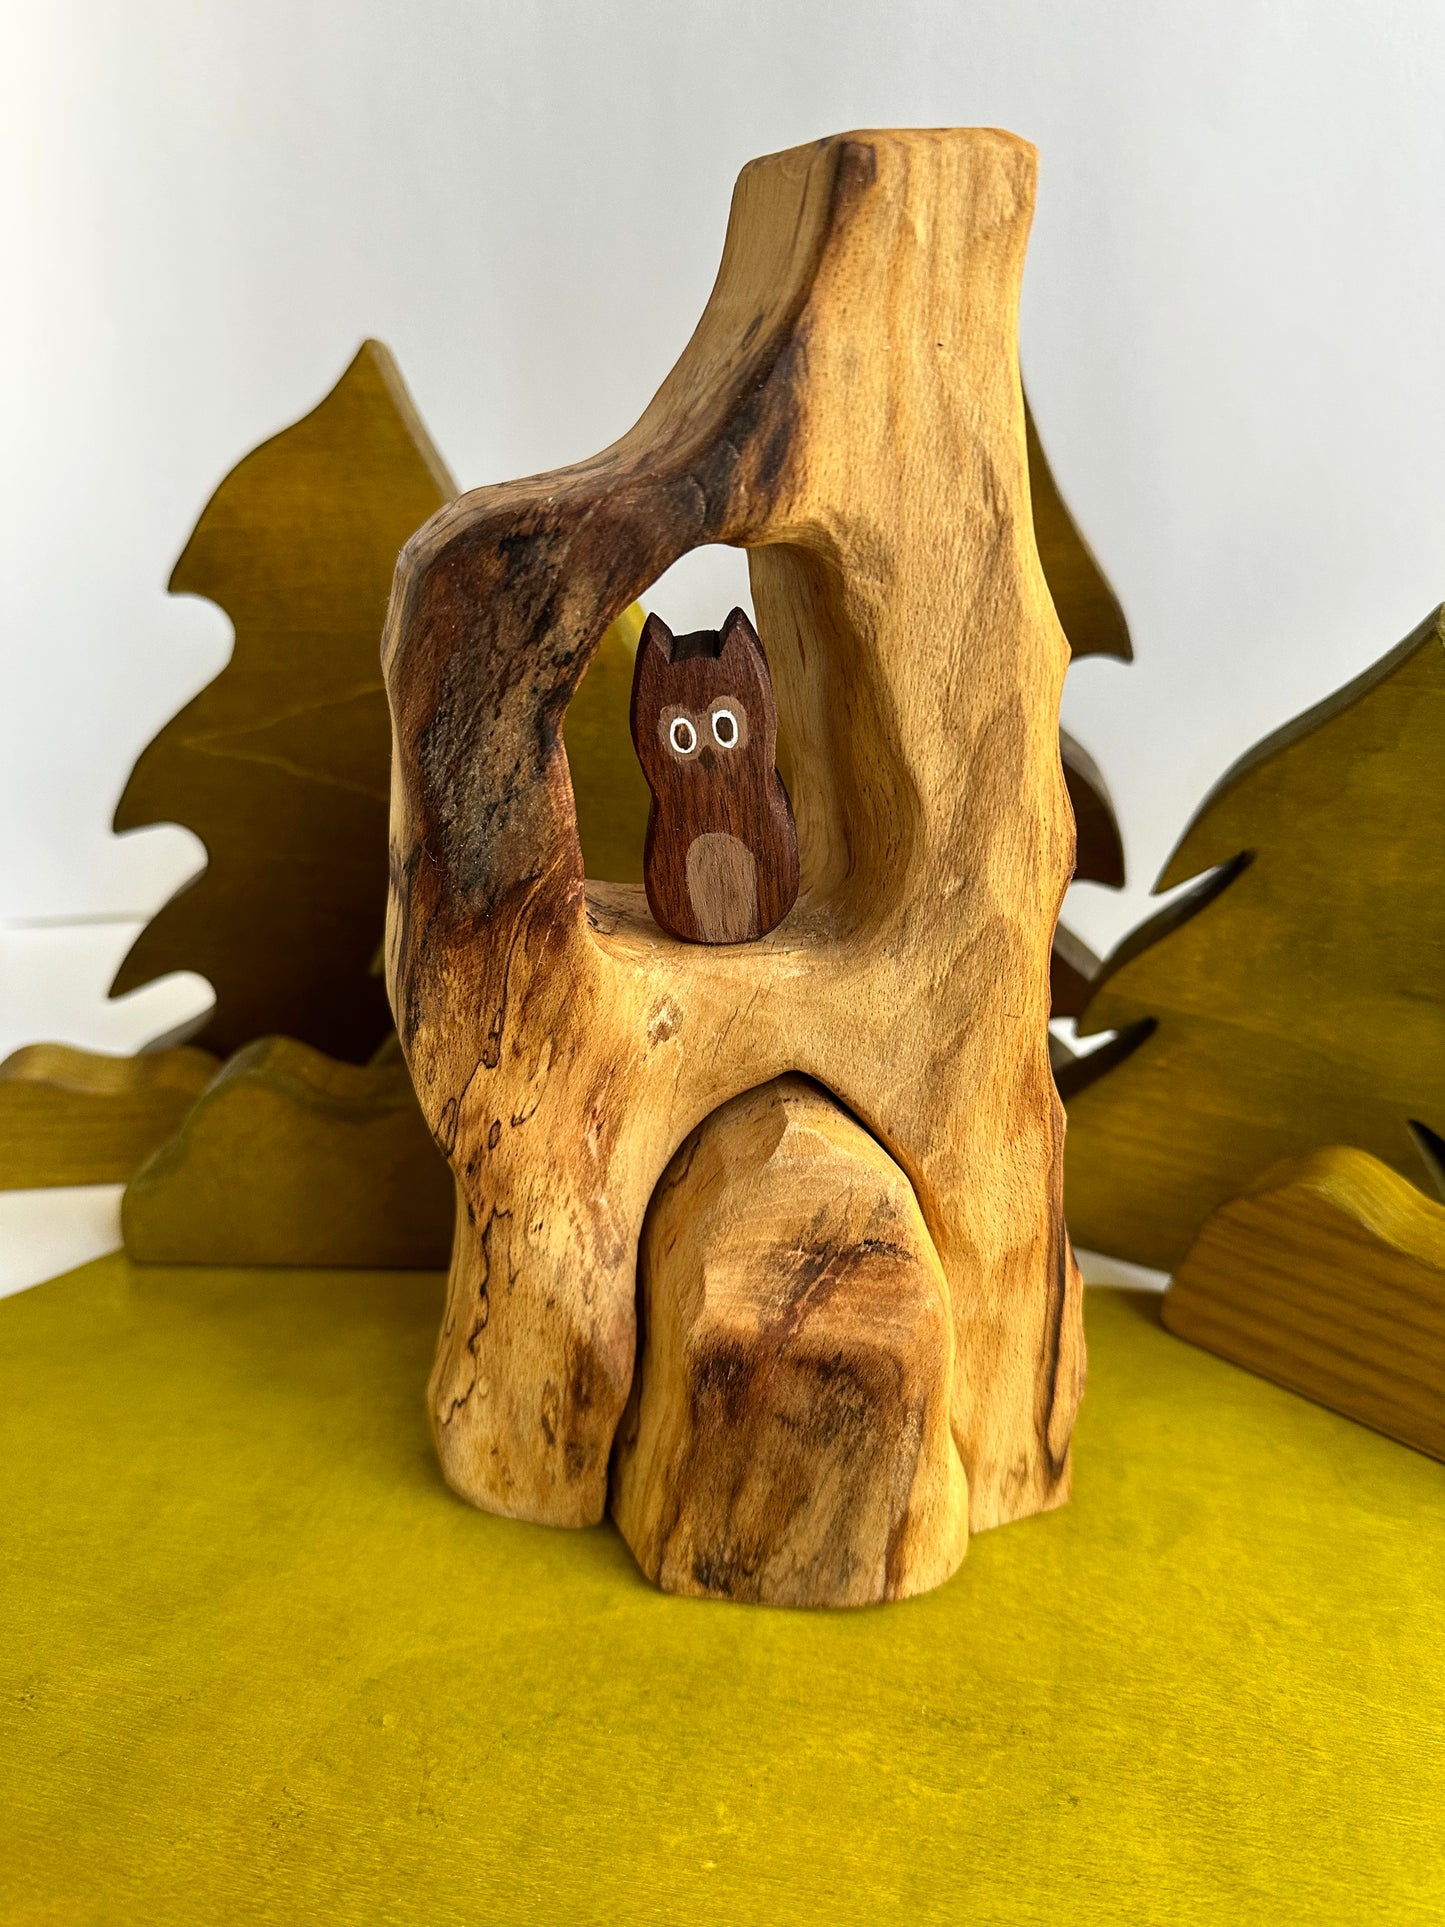 Forest Tree stump & owl